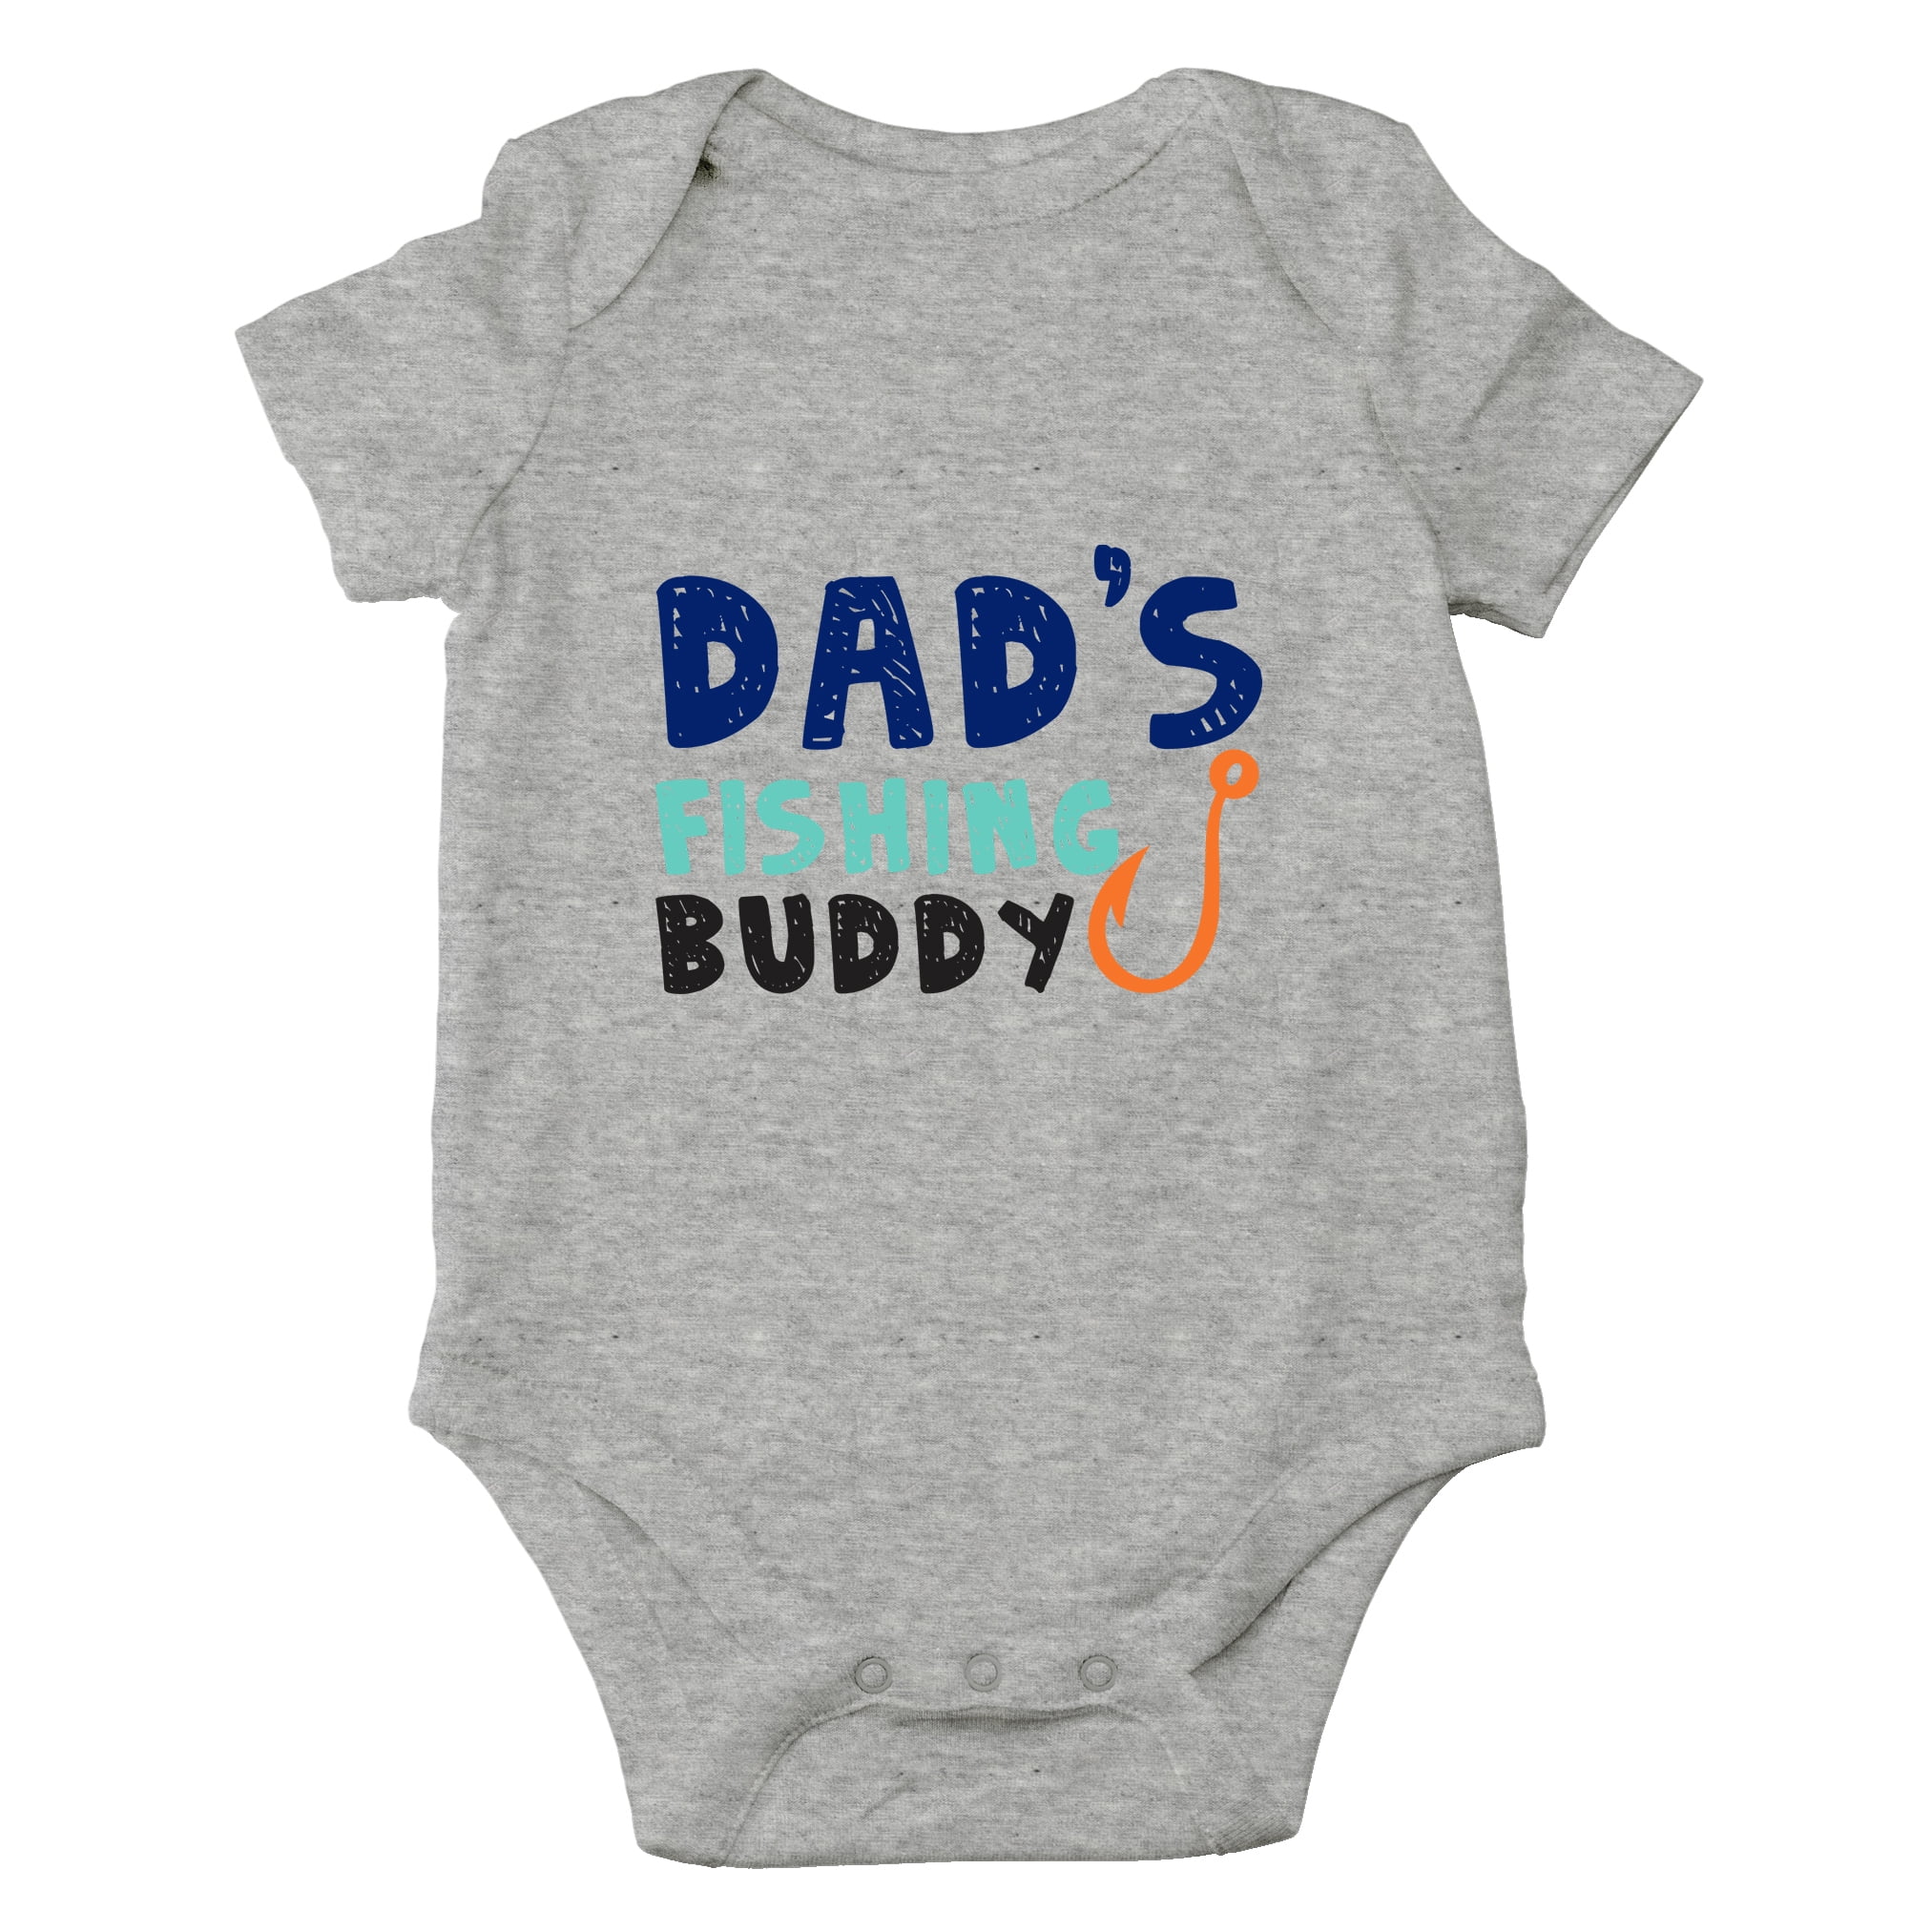 Daddy's Fishing Buddy Onesie®. Future Fly Fisherman Baby Onsie